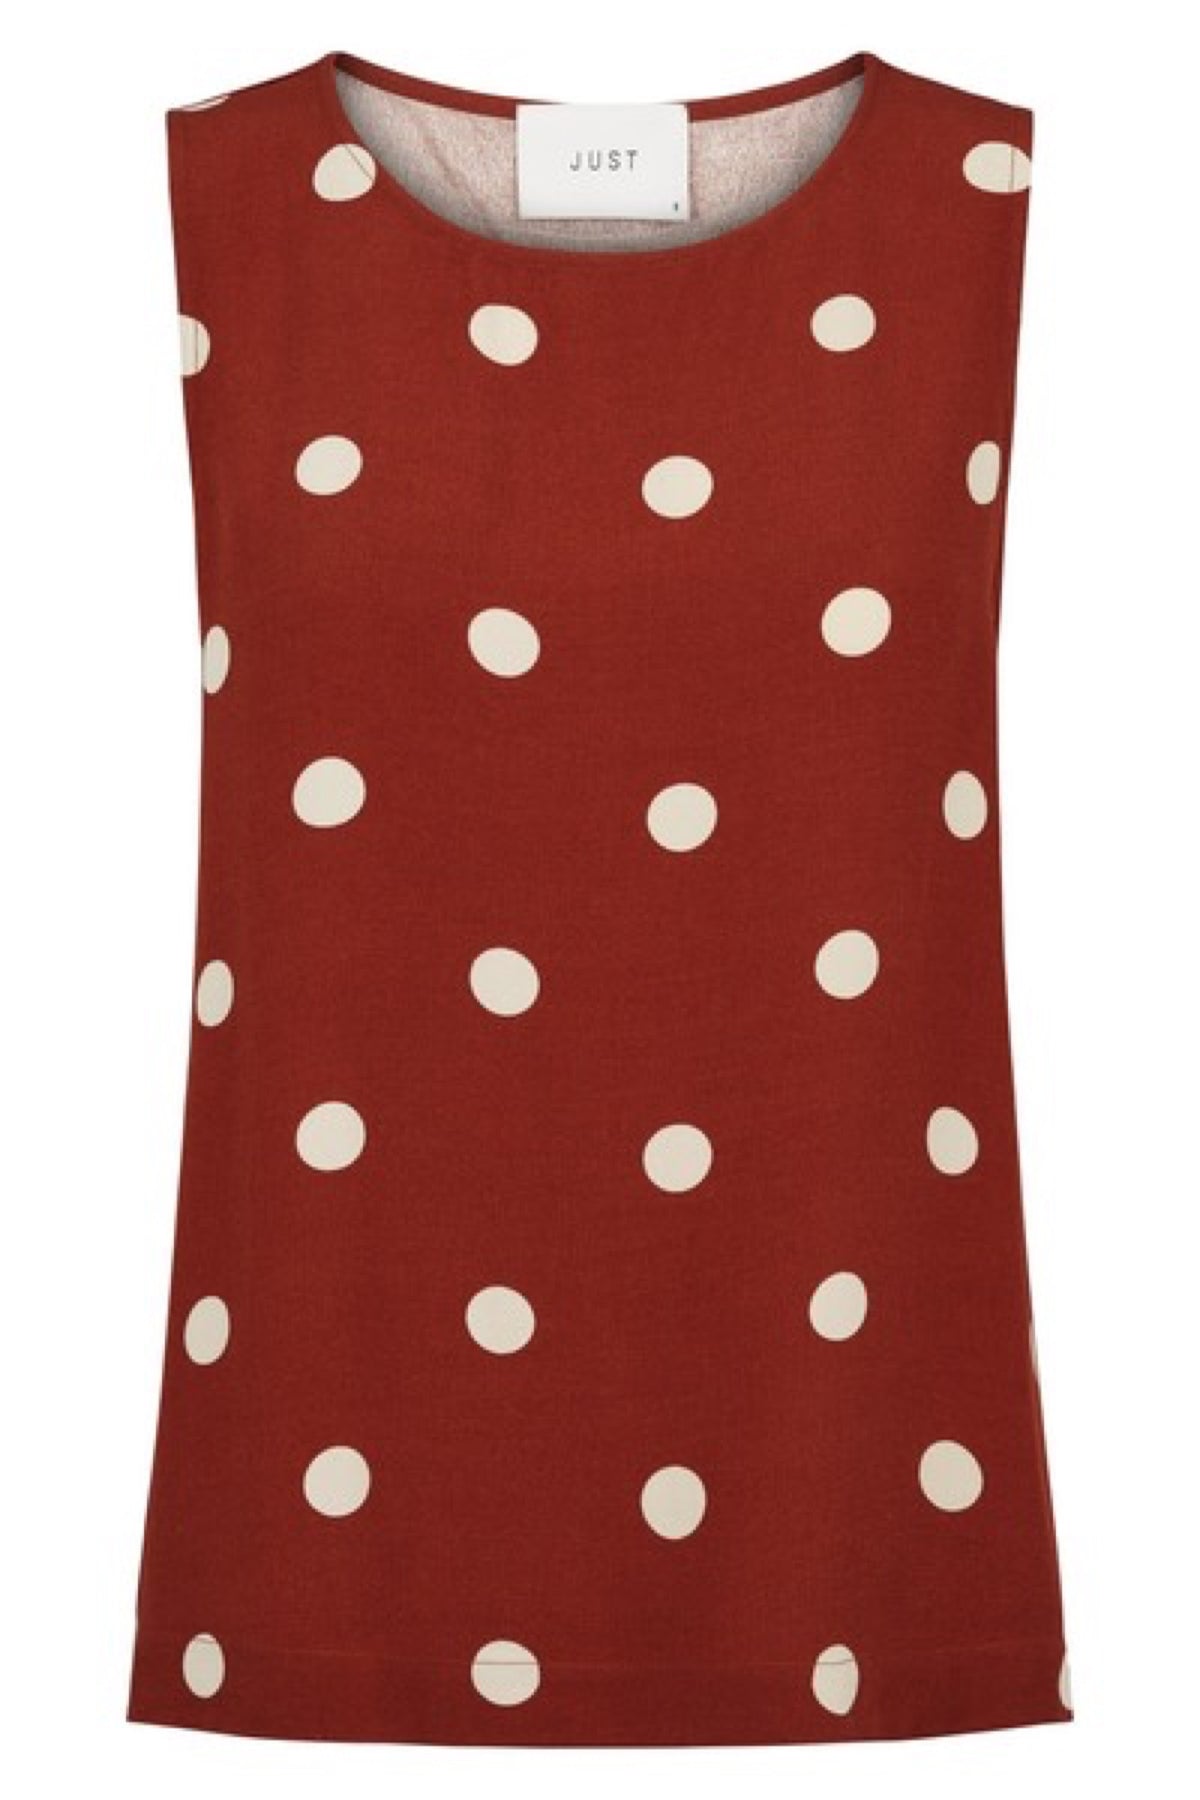 Caia top - Barn red polka dot - Just Female - T-skjorter & Topper - VILLOID.no